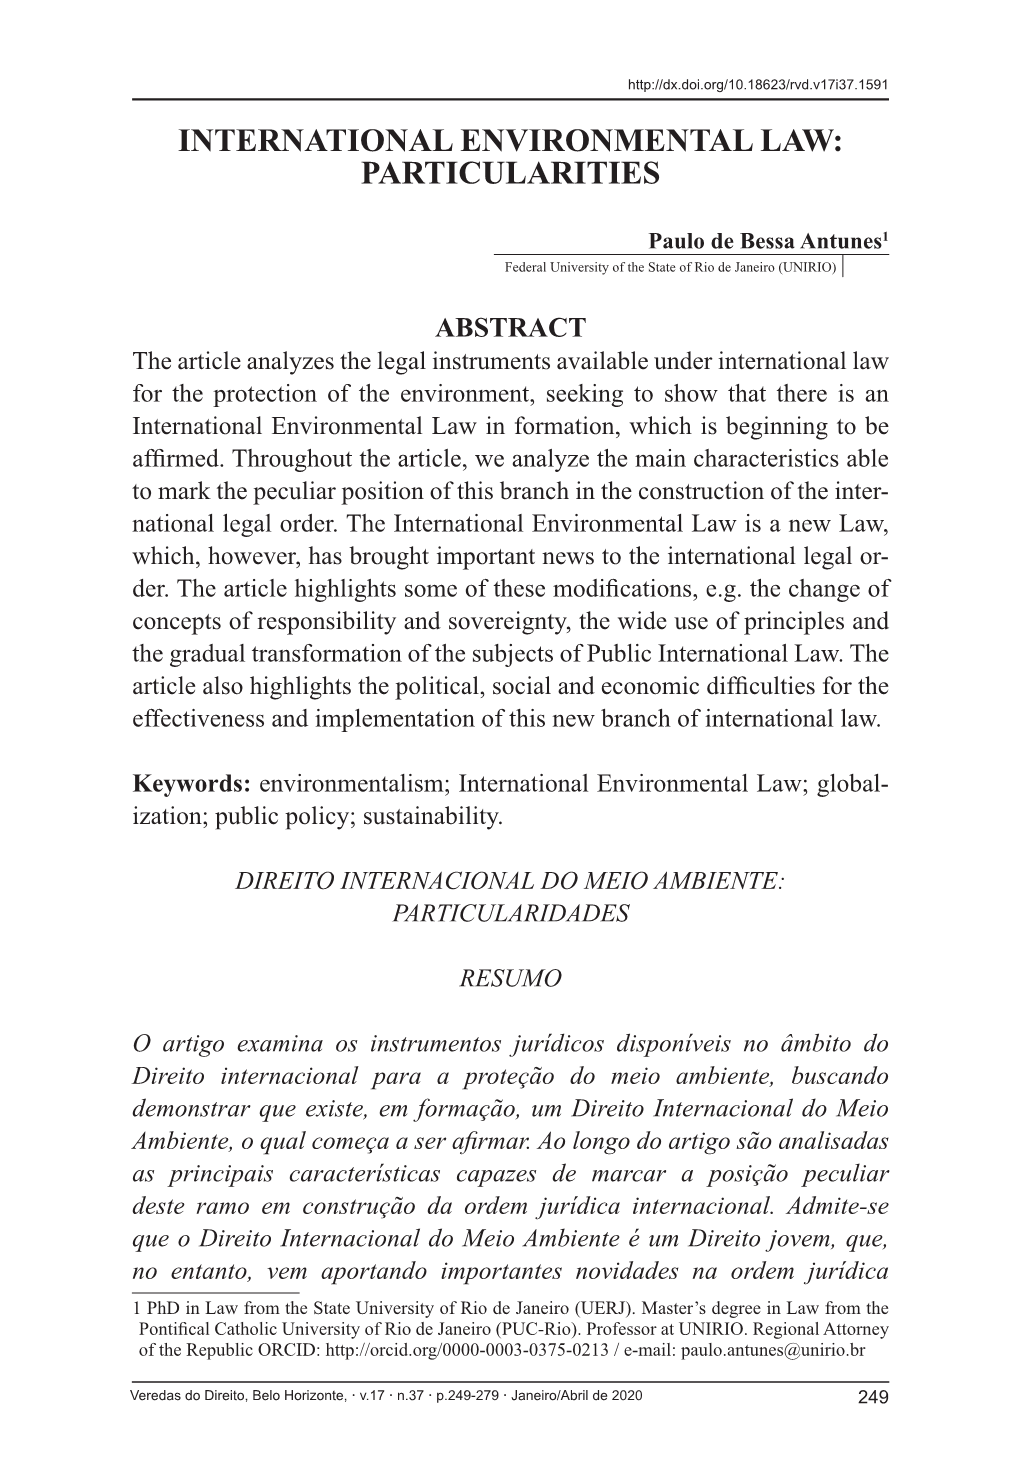 International Environmental Law: Particularities